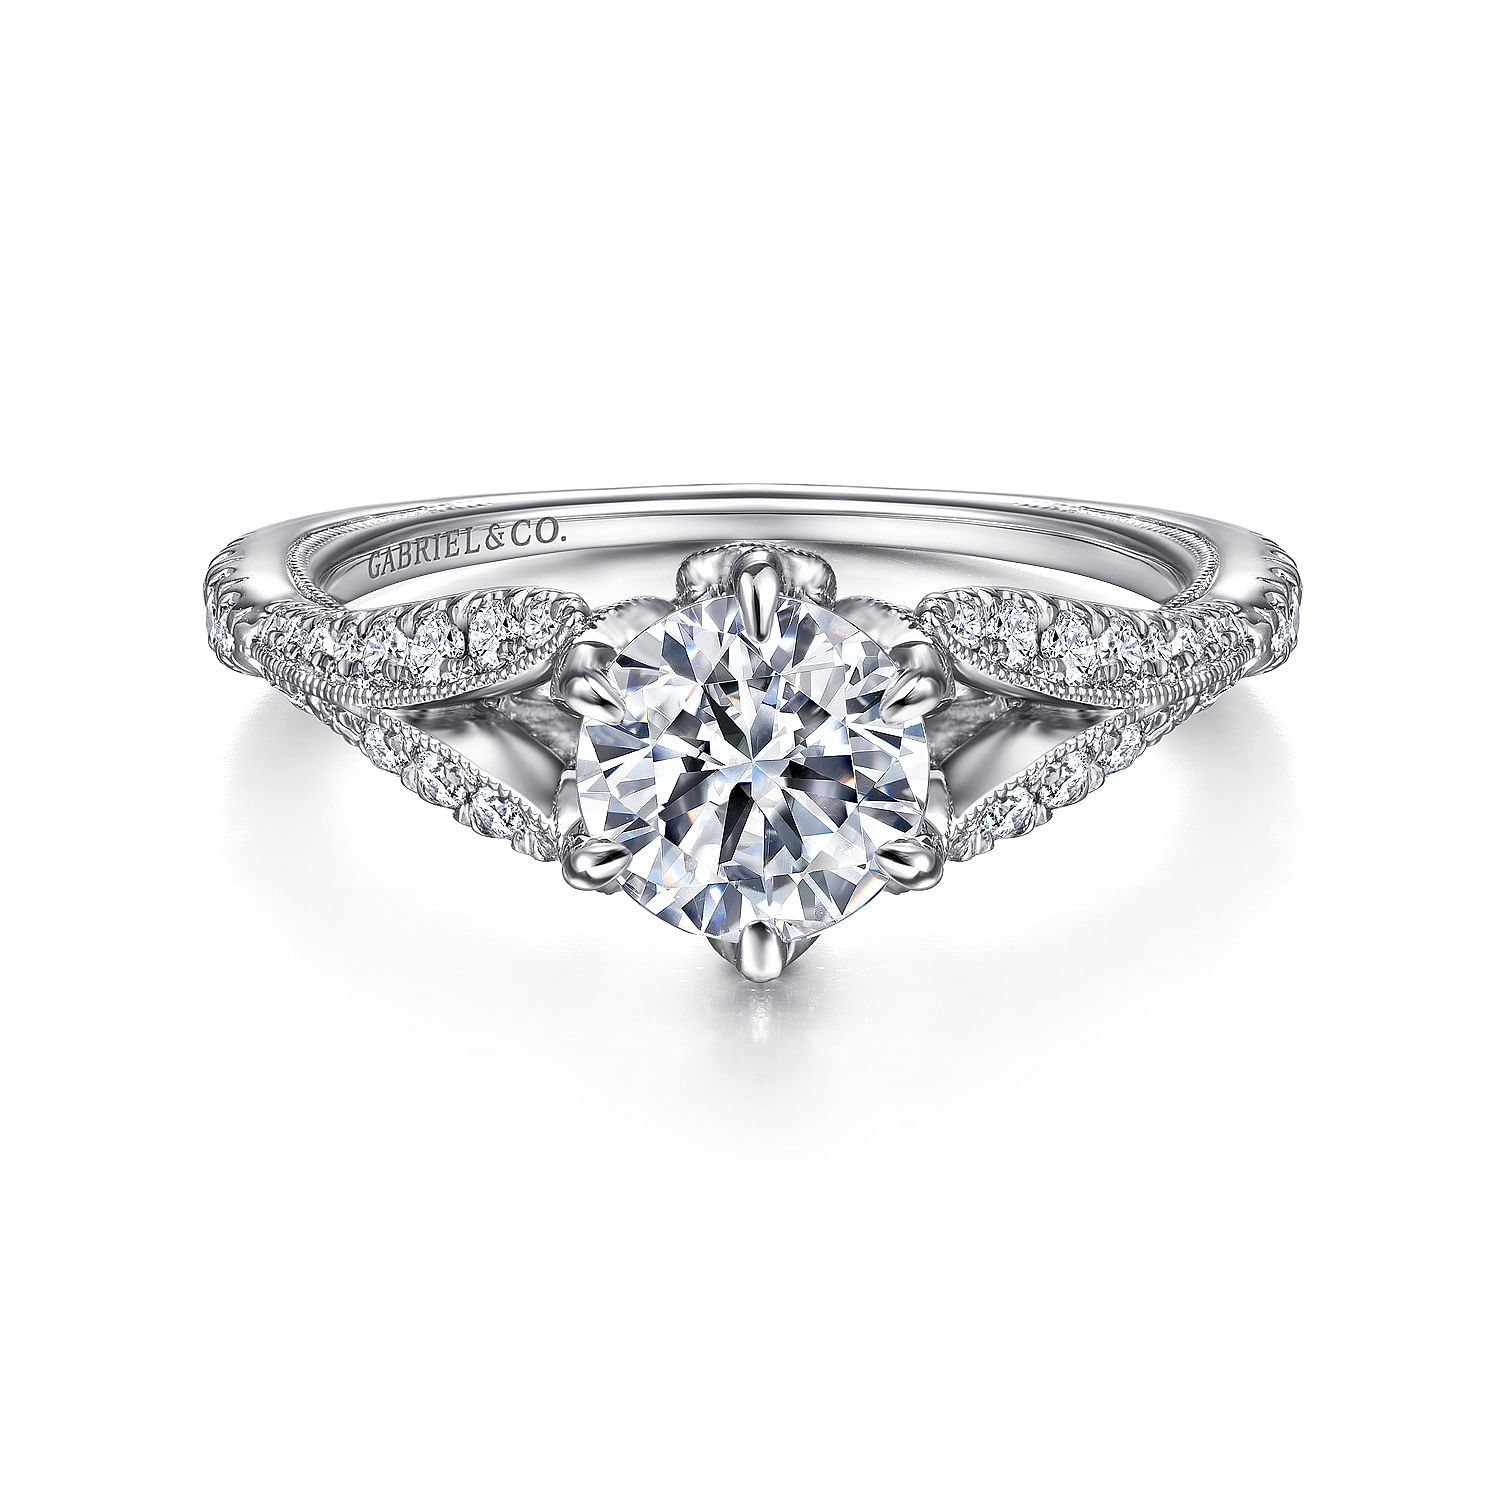 Gabriel - 18K White Gold Split Shank Round Diamond Engagement Ring